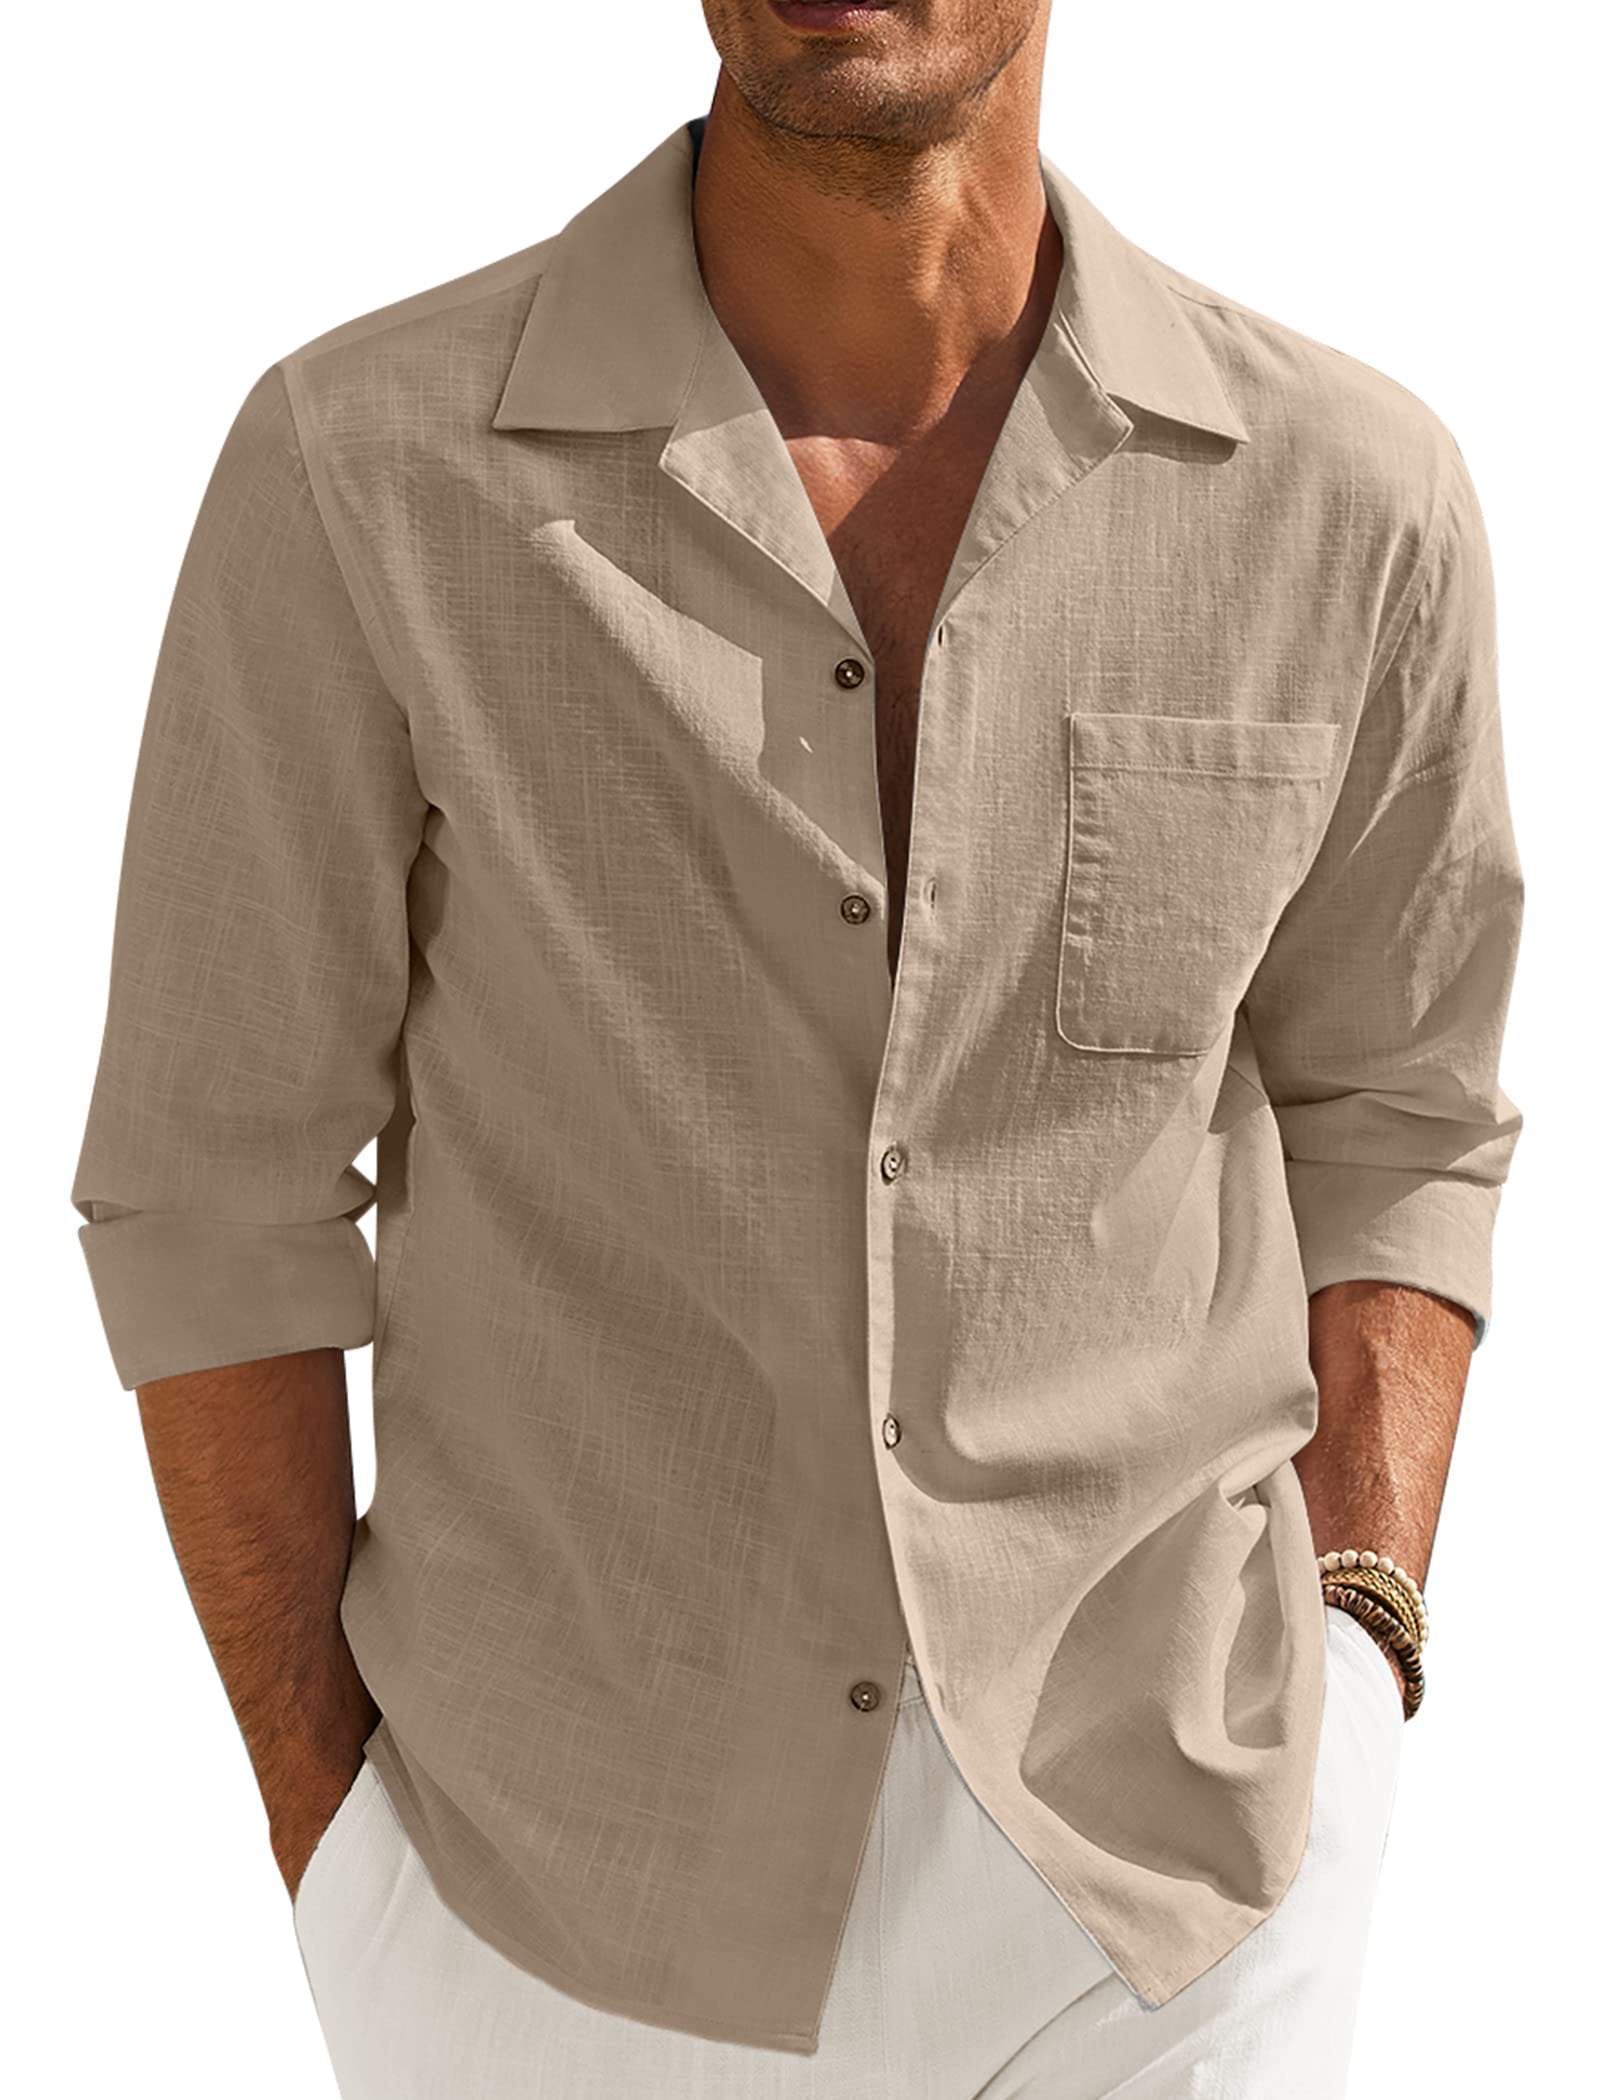 Men's Basic Cotton and Linen Long Sleeve Pocket Classic Shirt